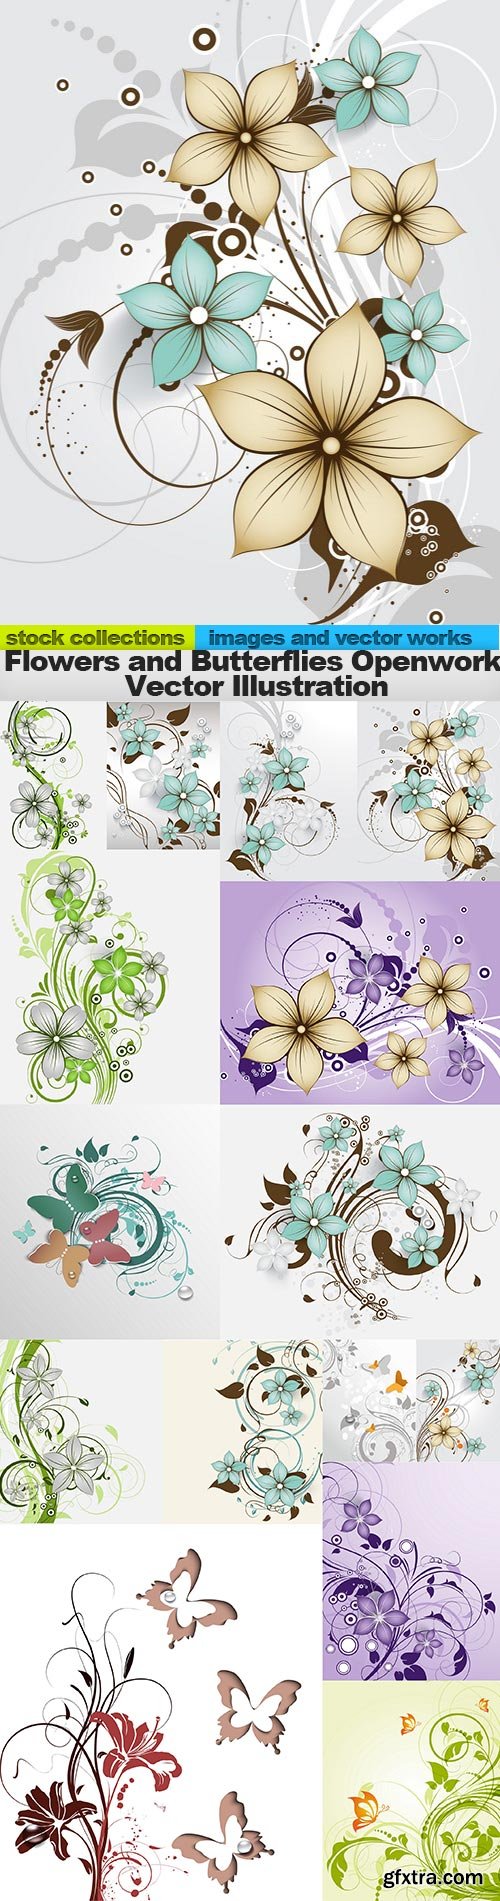 Flowers and Butterflies Openwork Vector Illustration, 15 x EPS